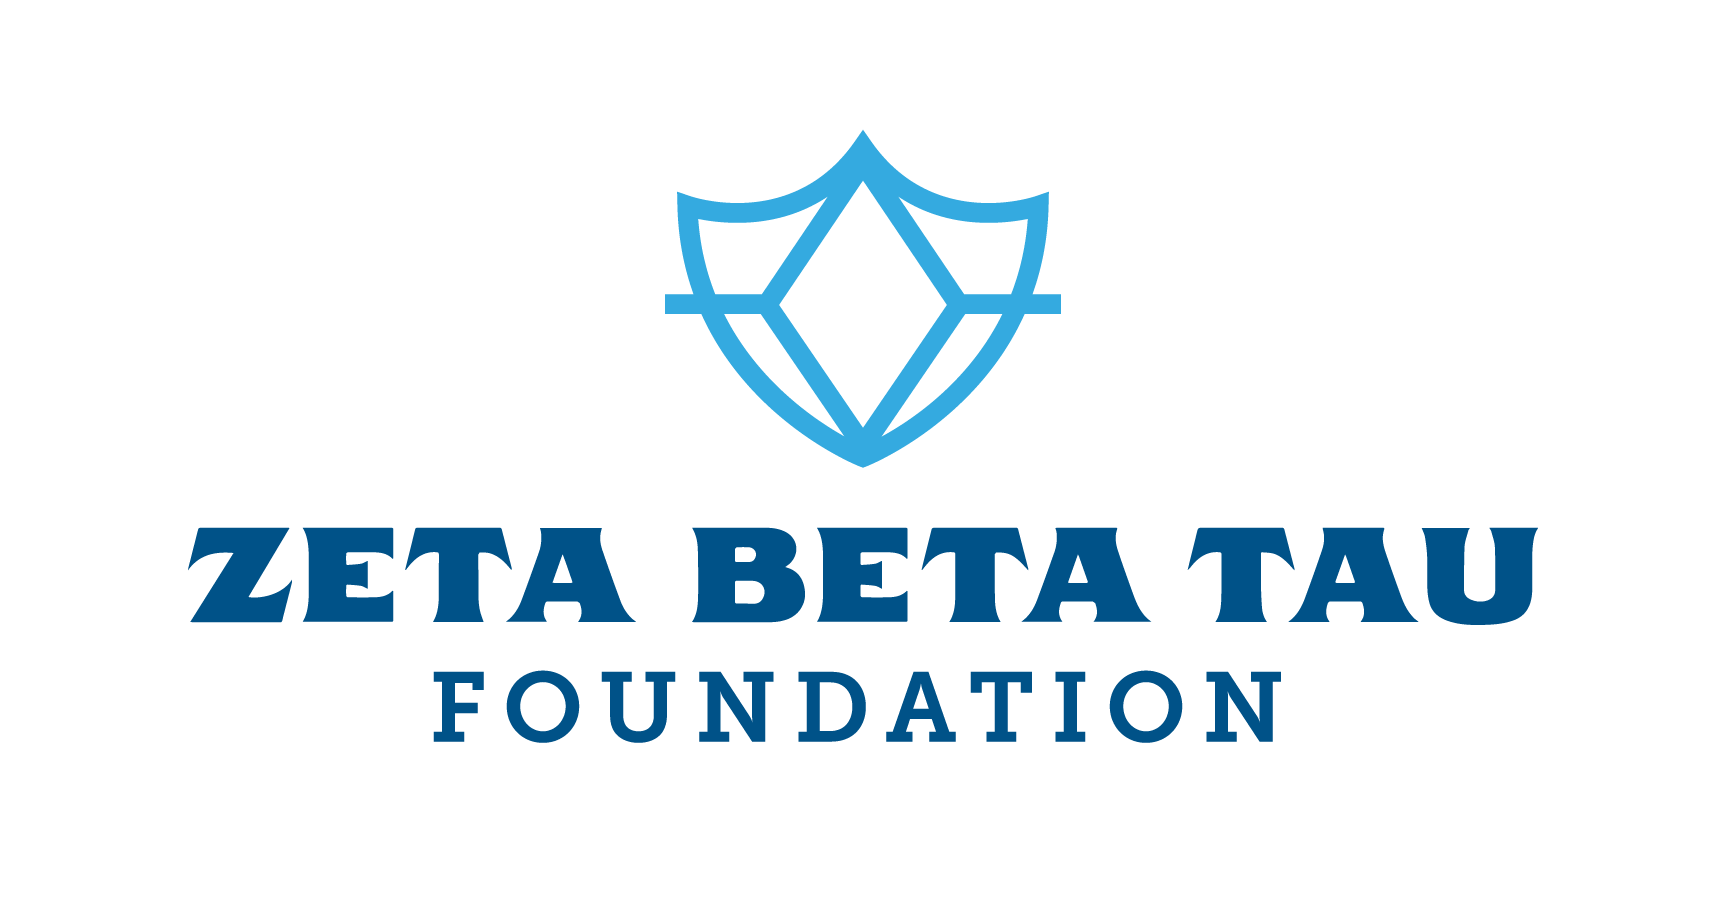 Zeta Beta Tau Foundation